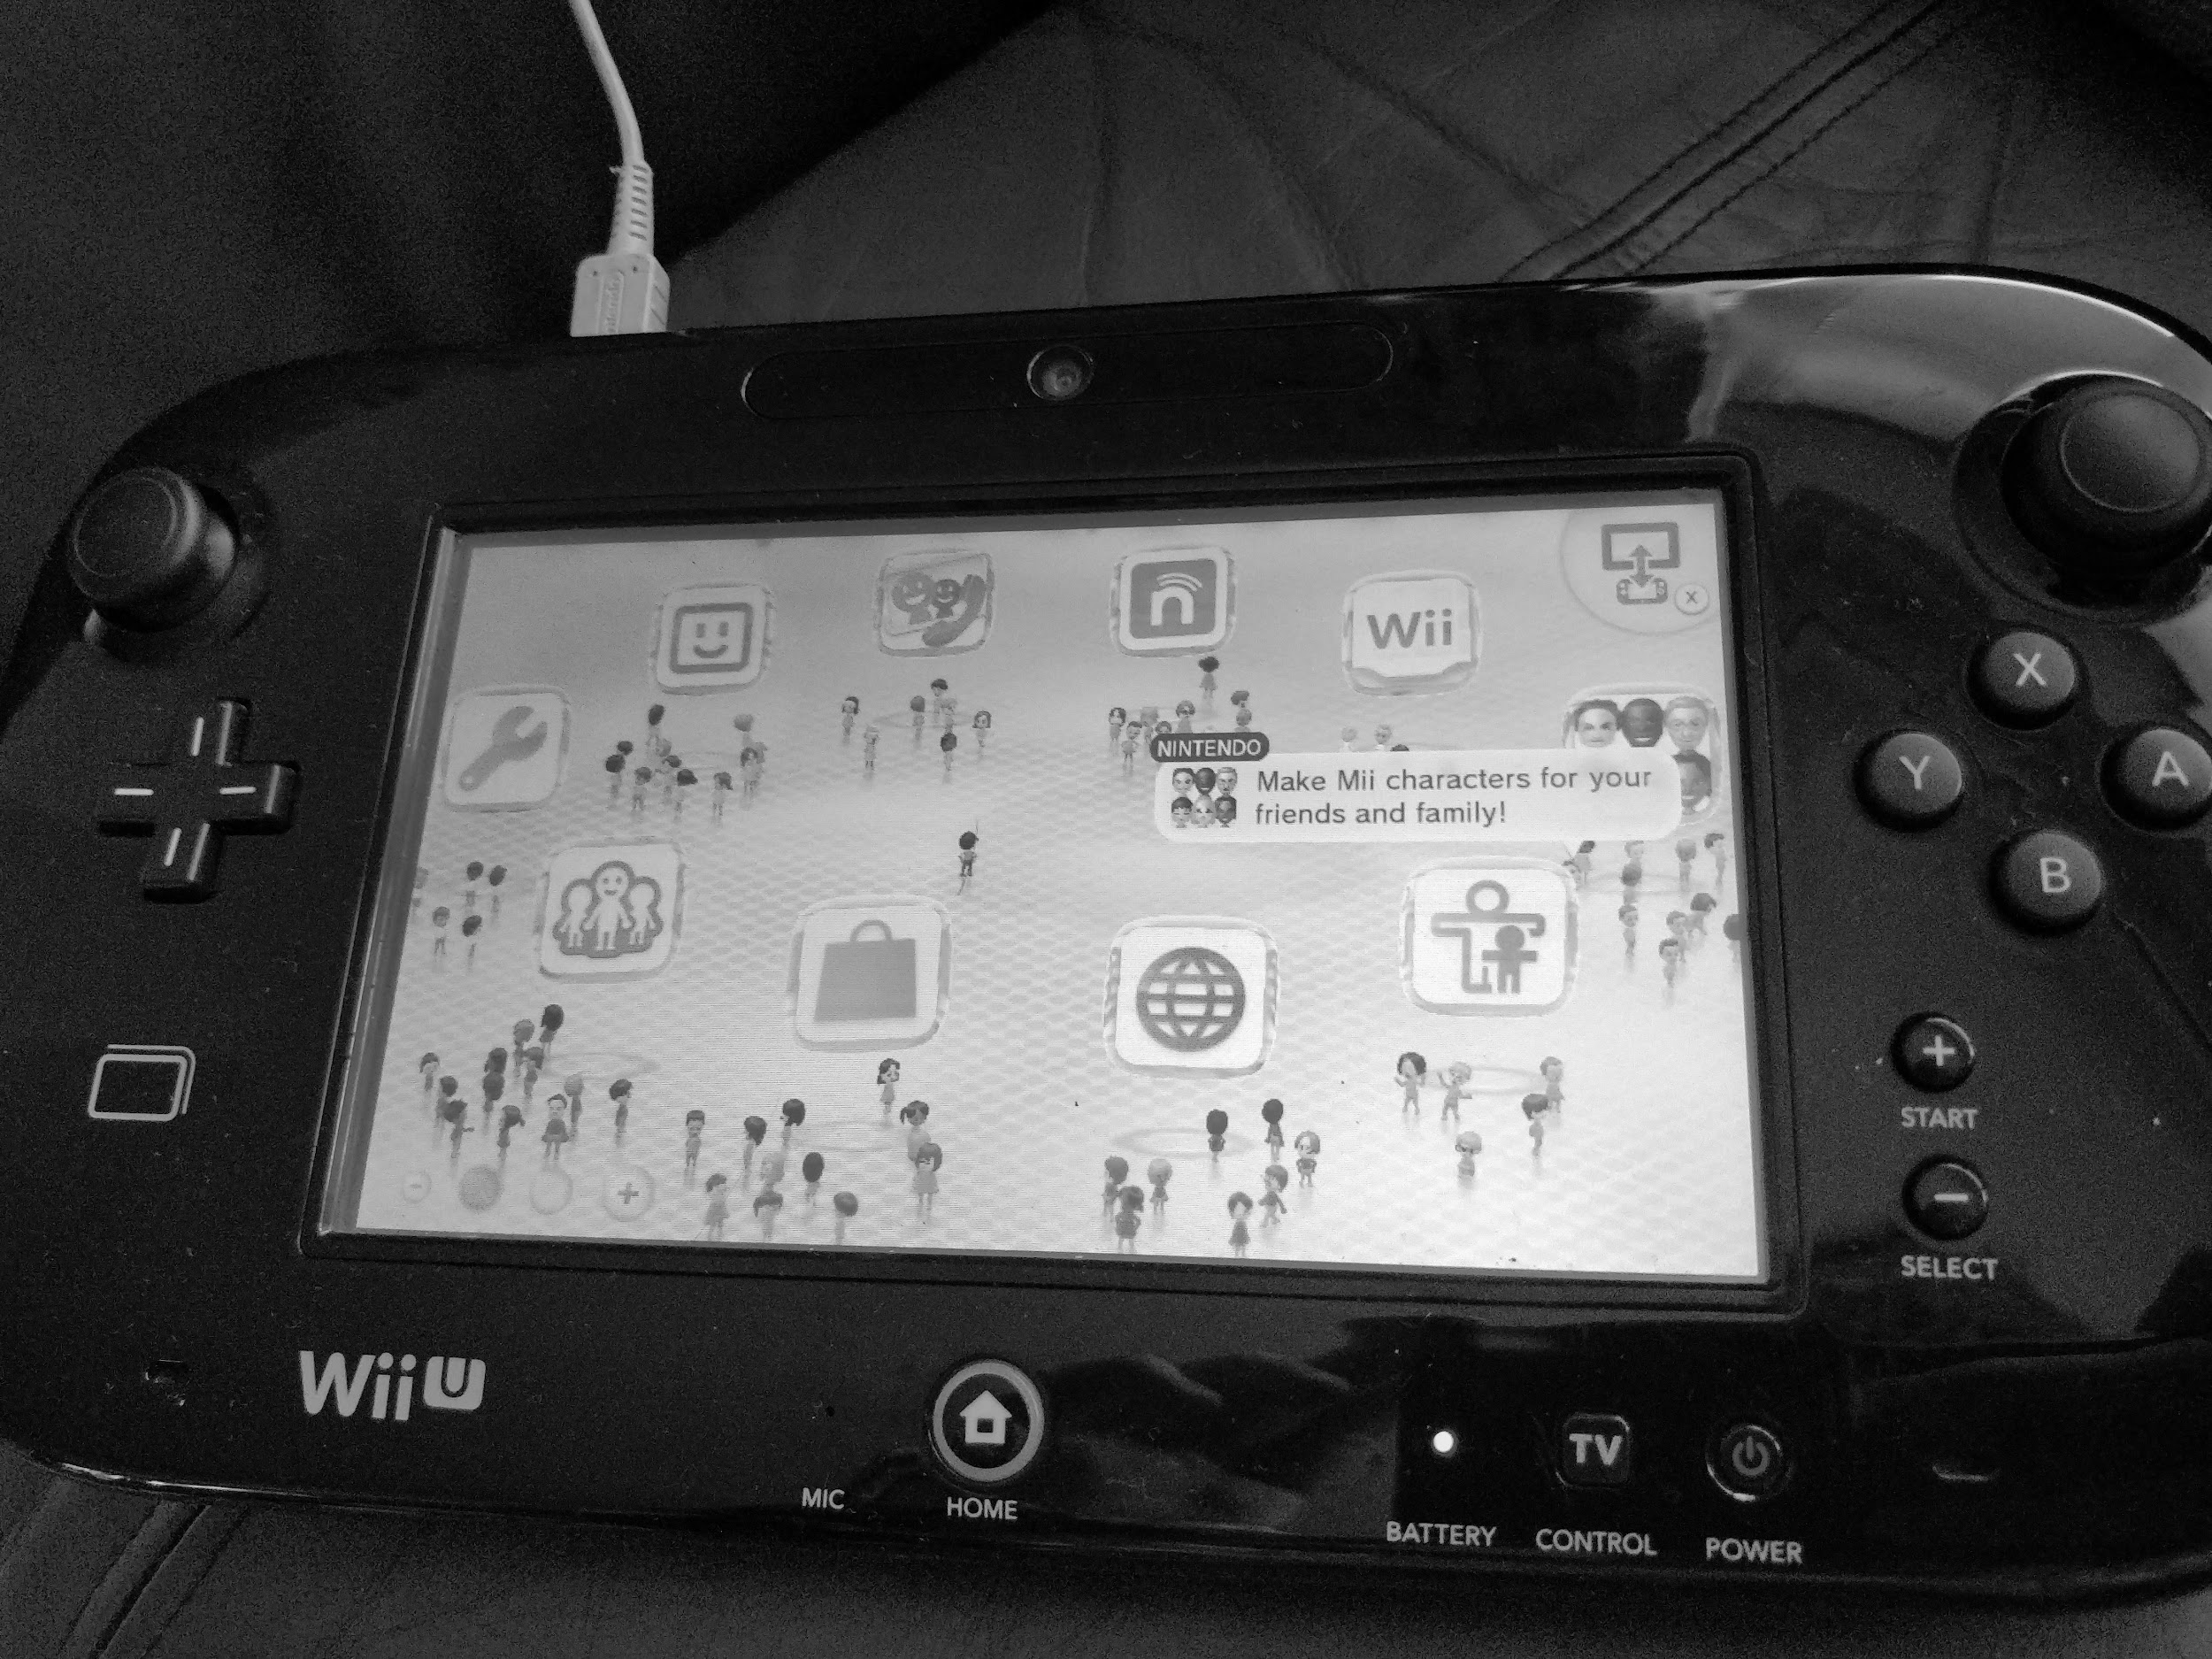 The scene of the Wii U menu on a black and white Wii U 